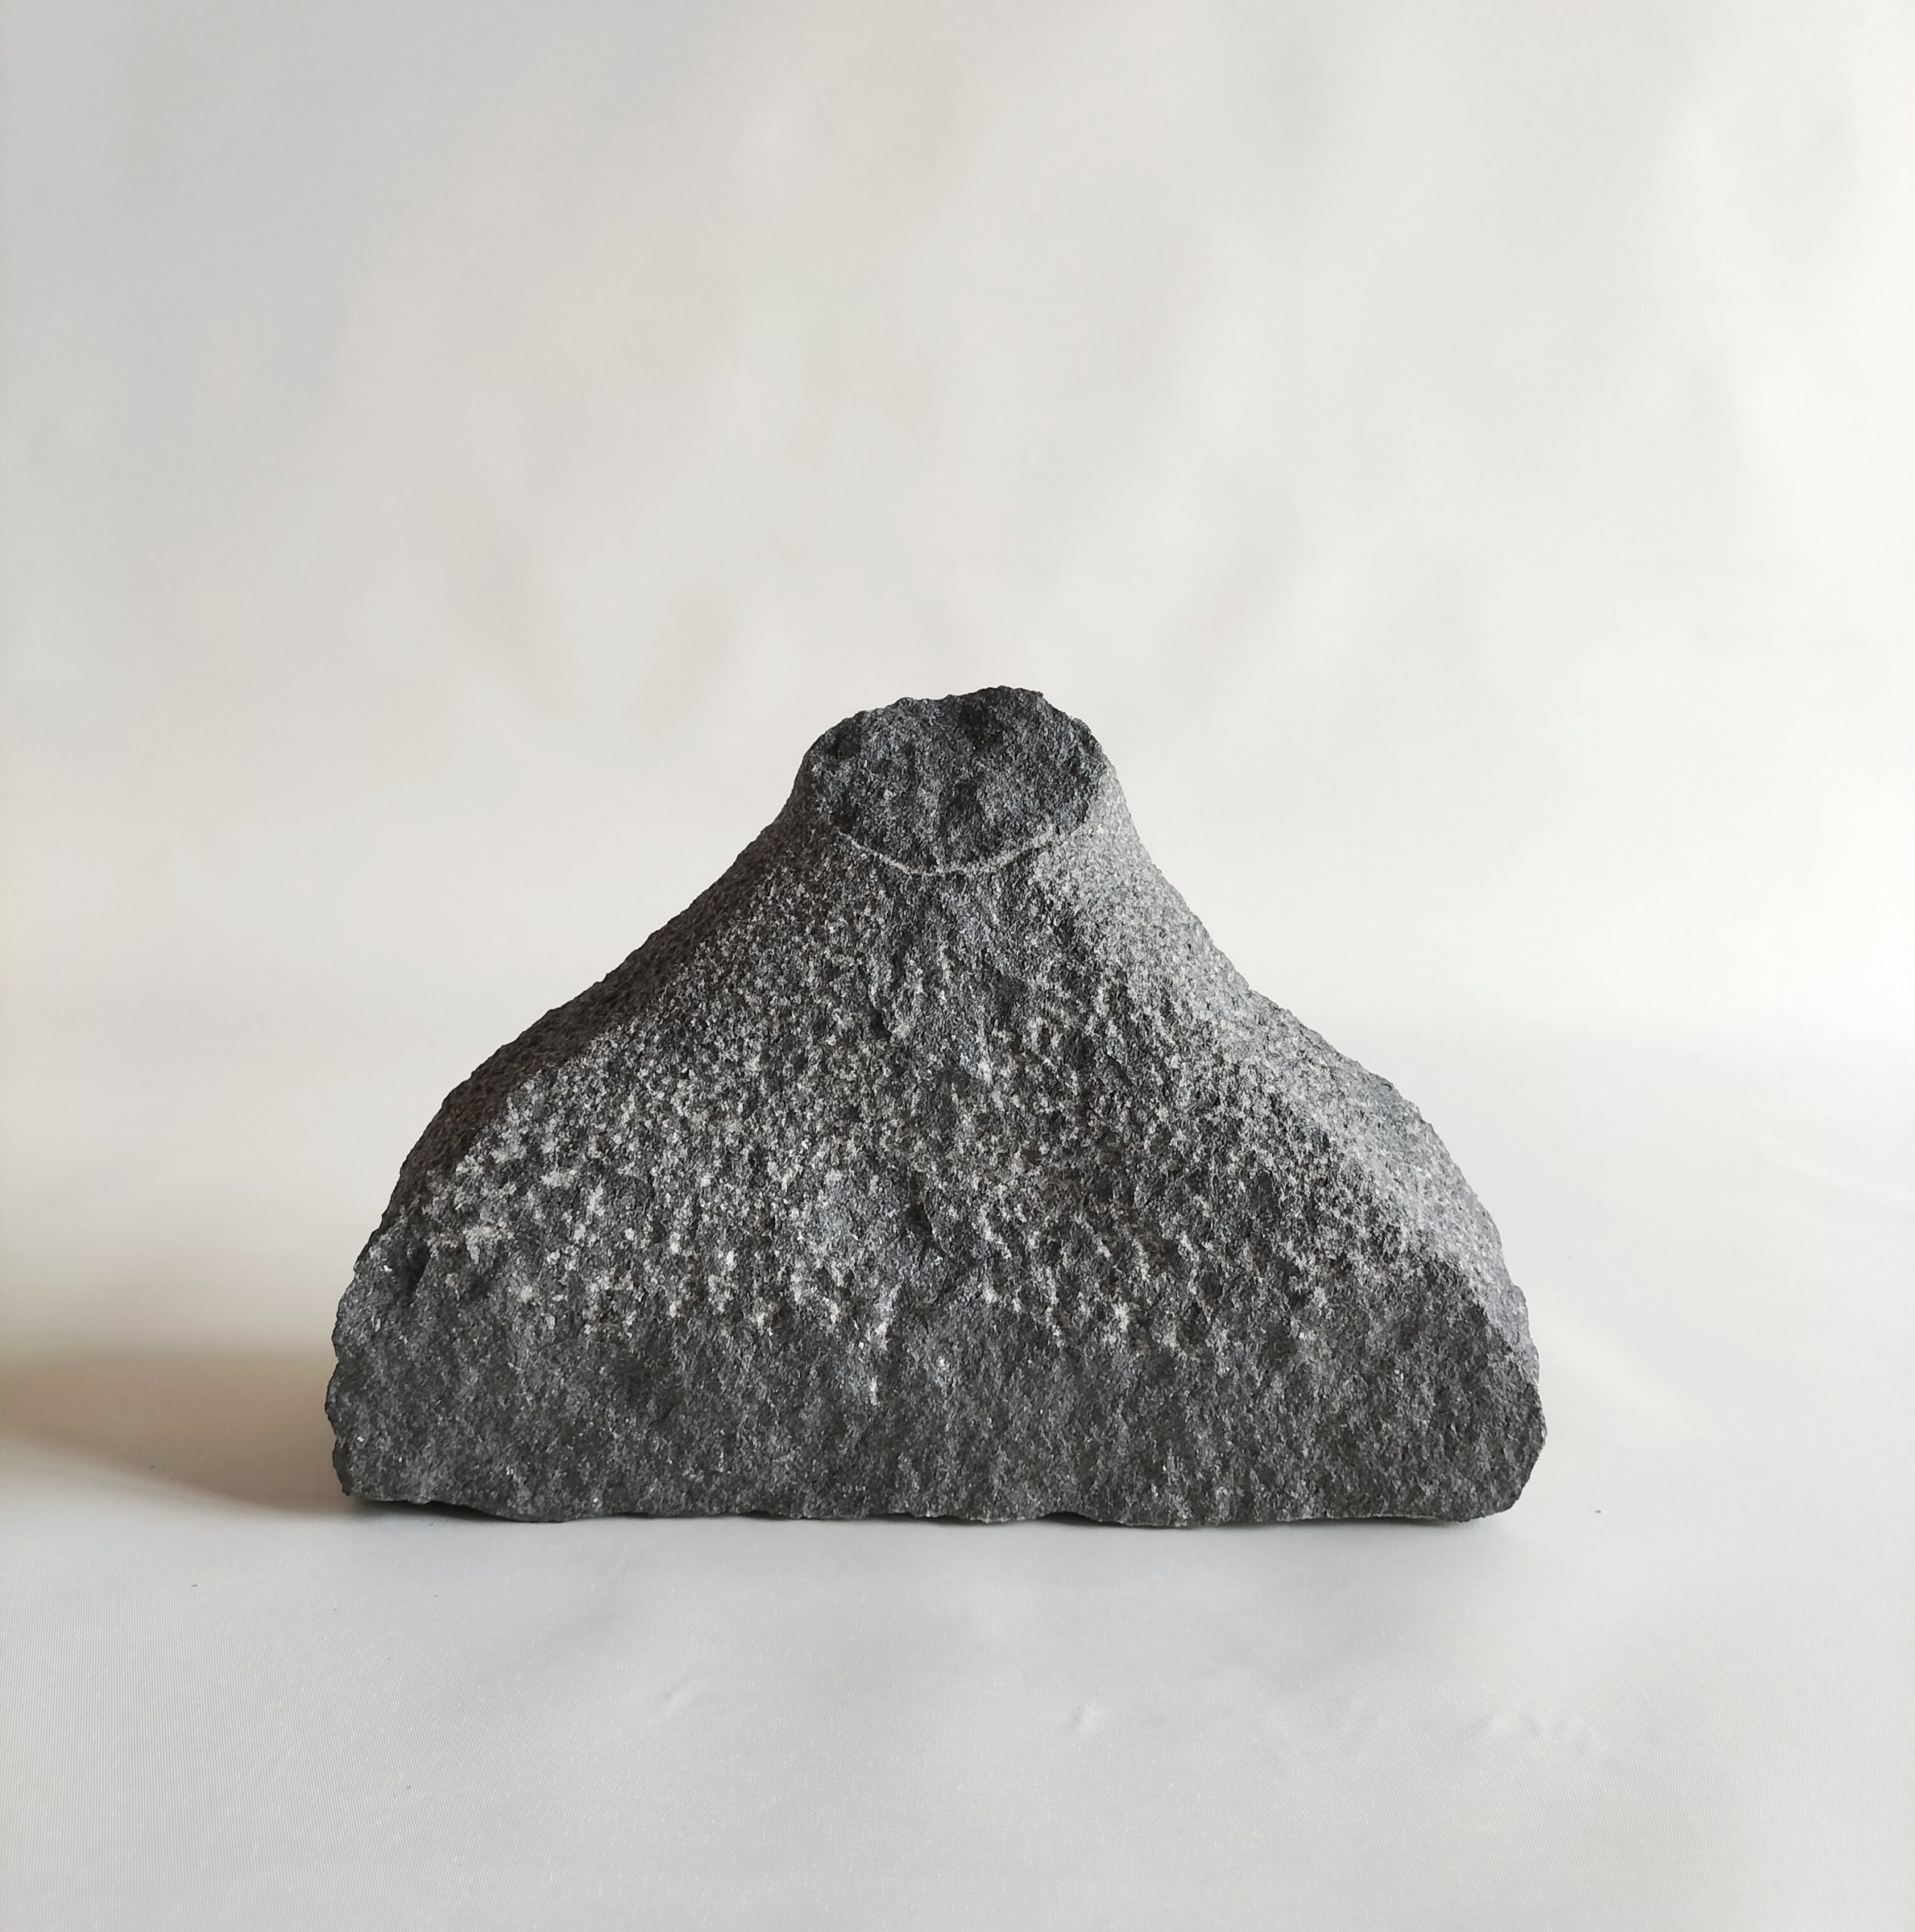 Foundation stone (日輪）